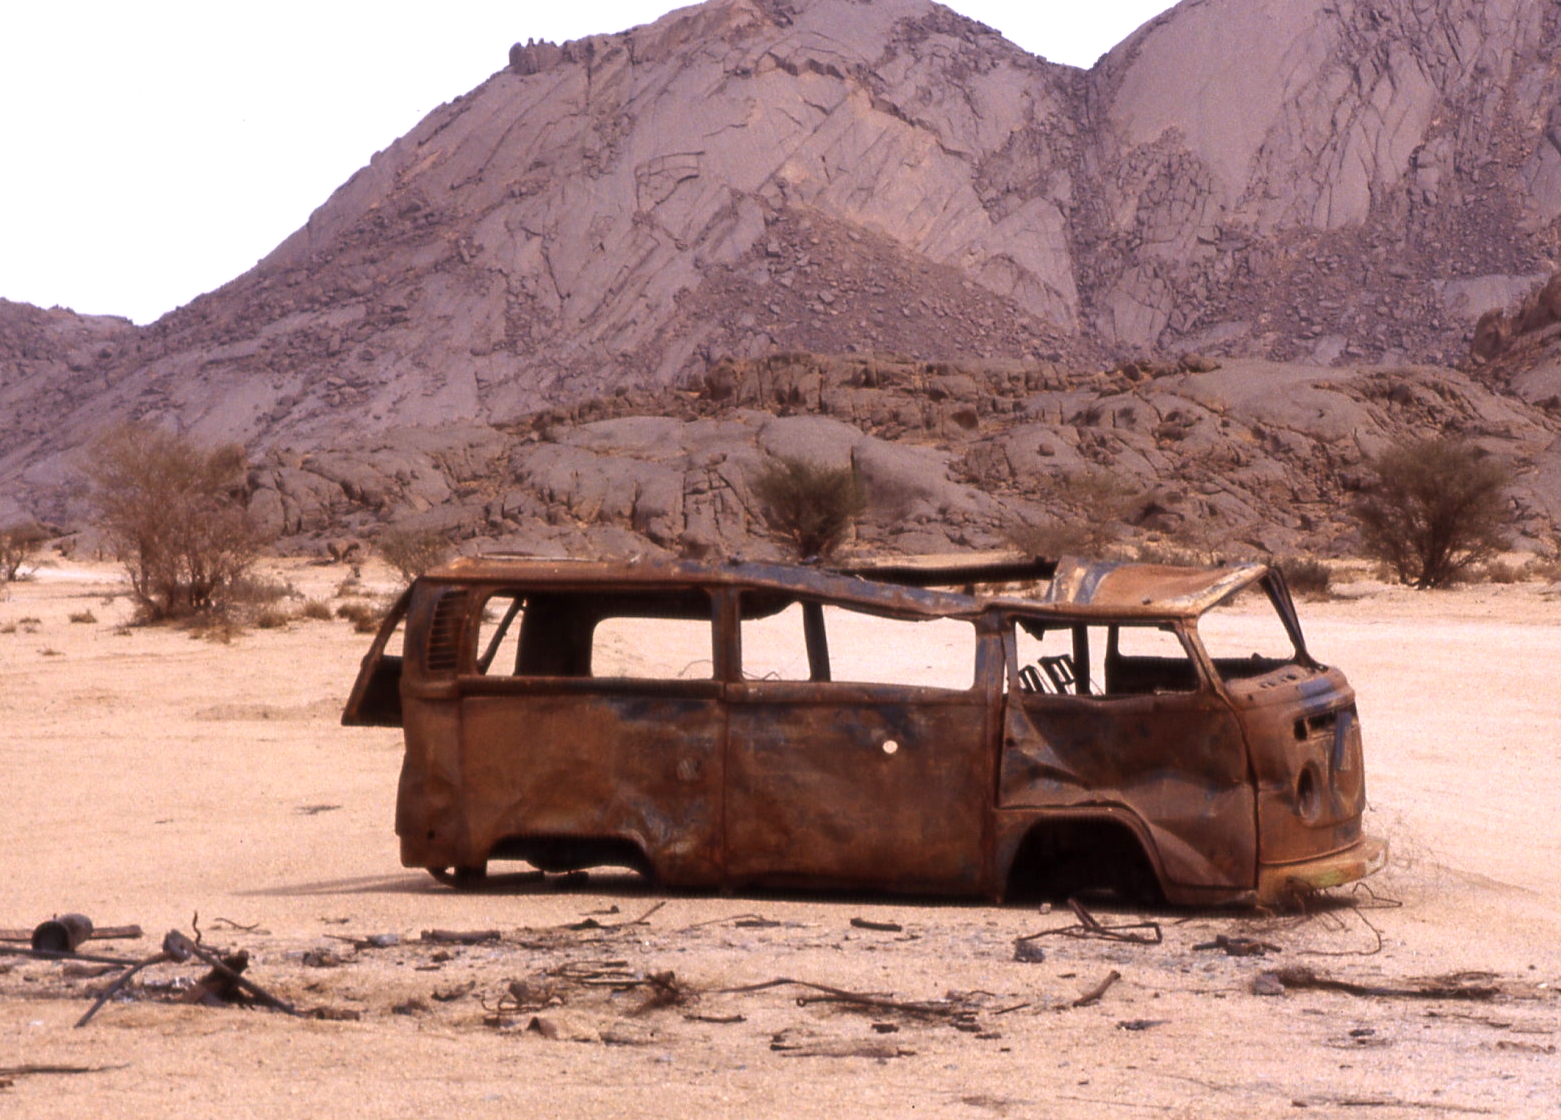 AlgeriaSahara-CarWrecks-BusVW-UntoppledByBR-a32r.jpg